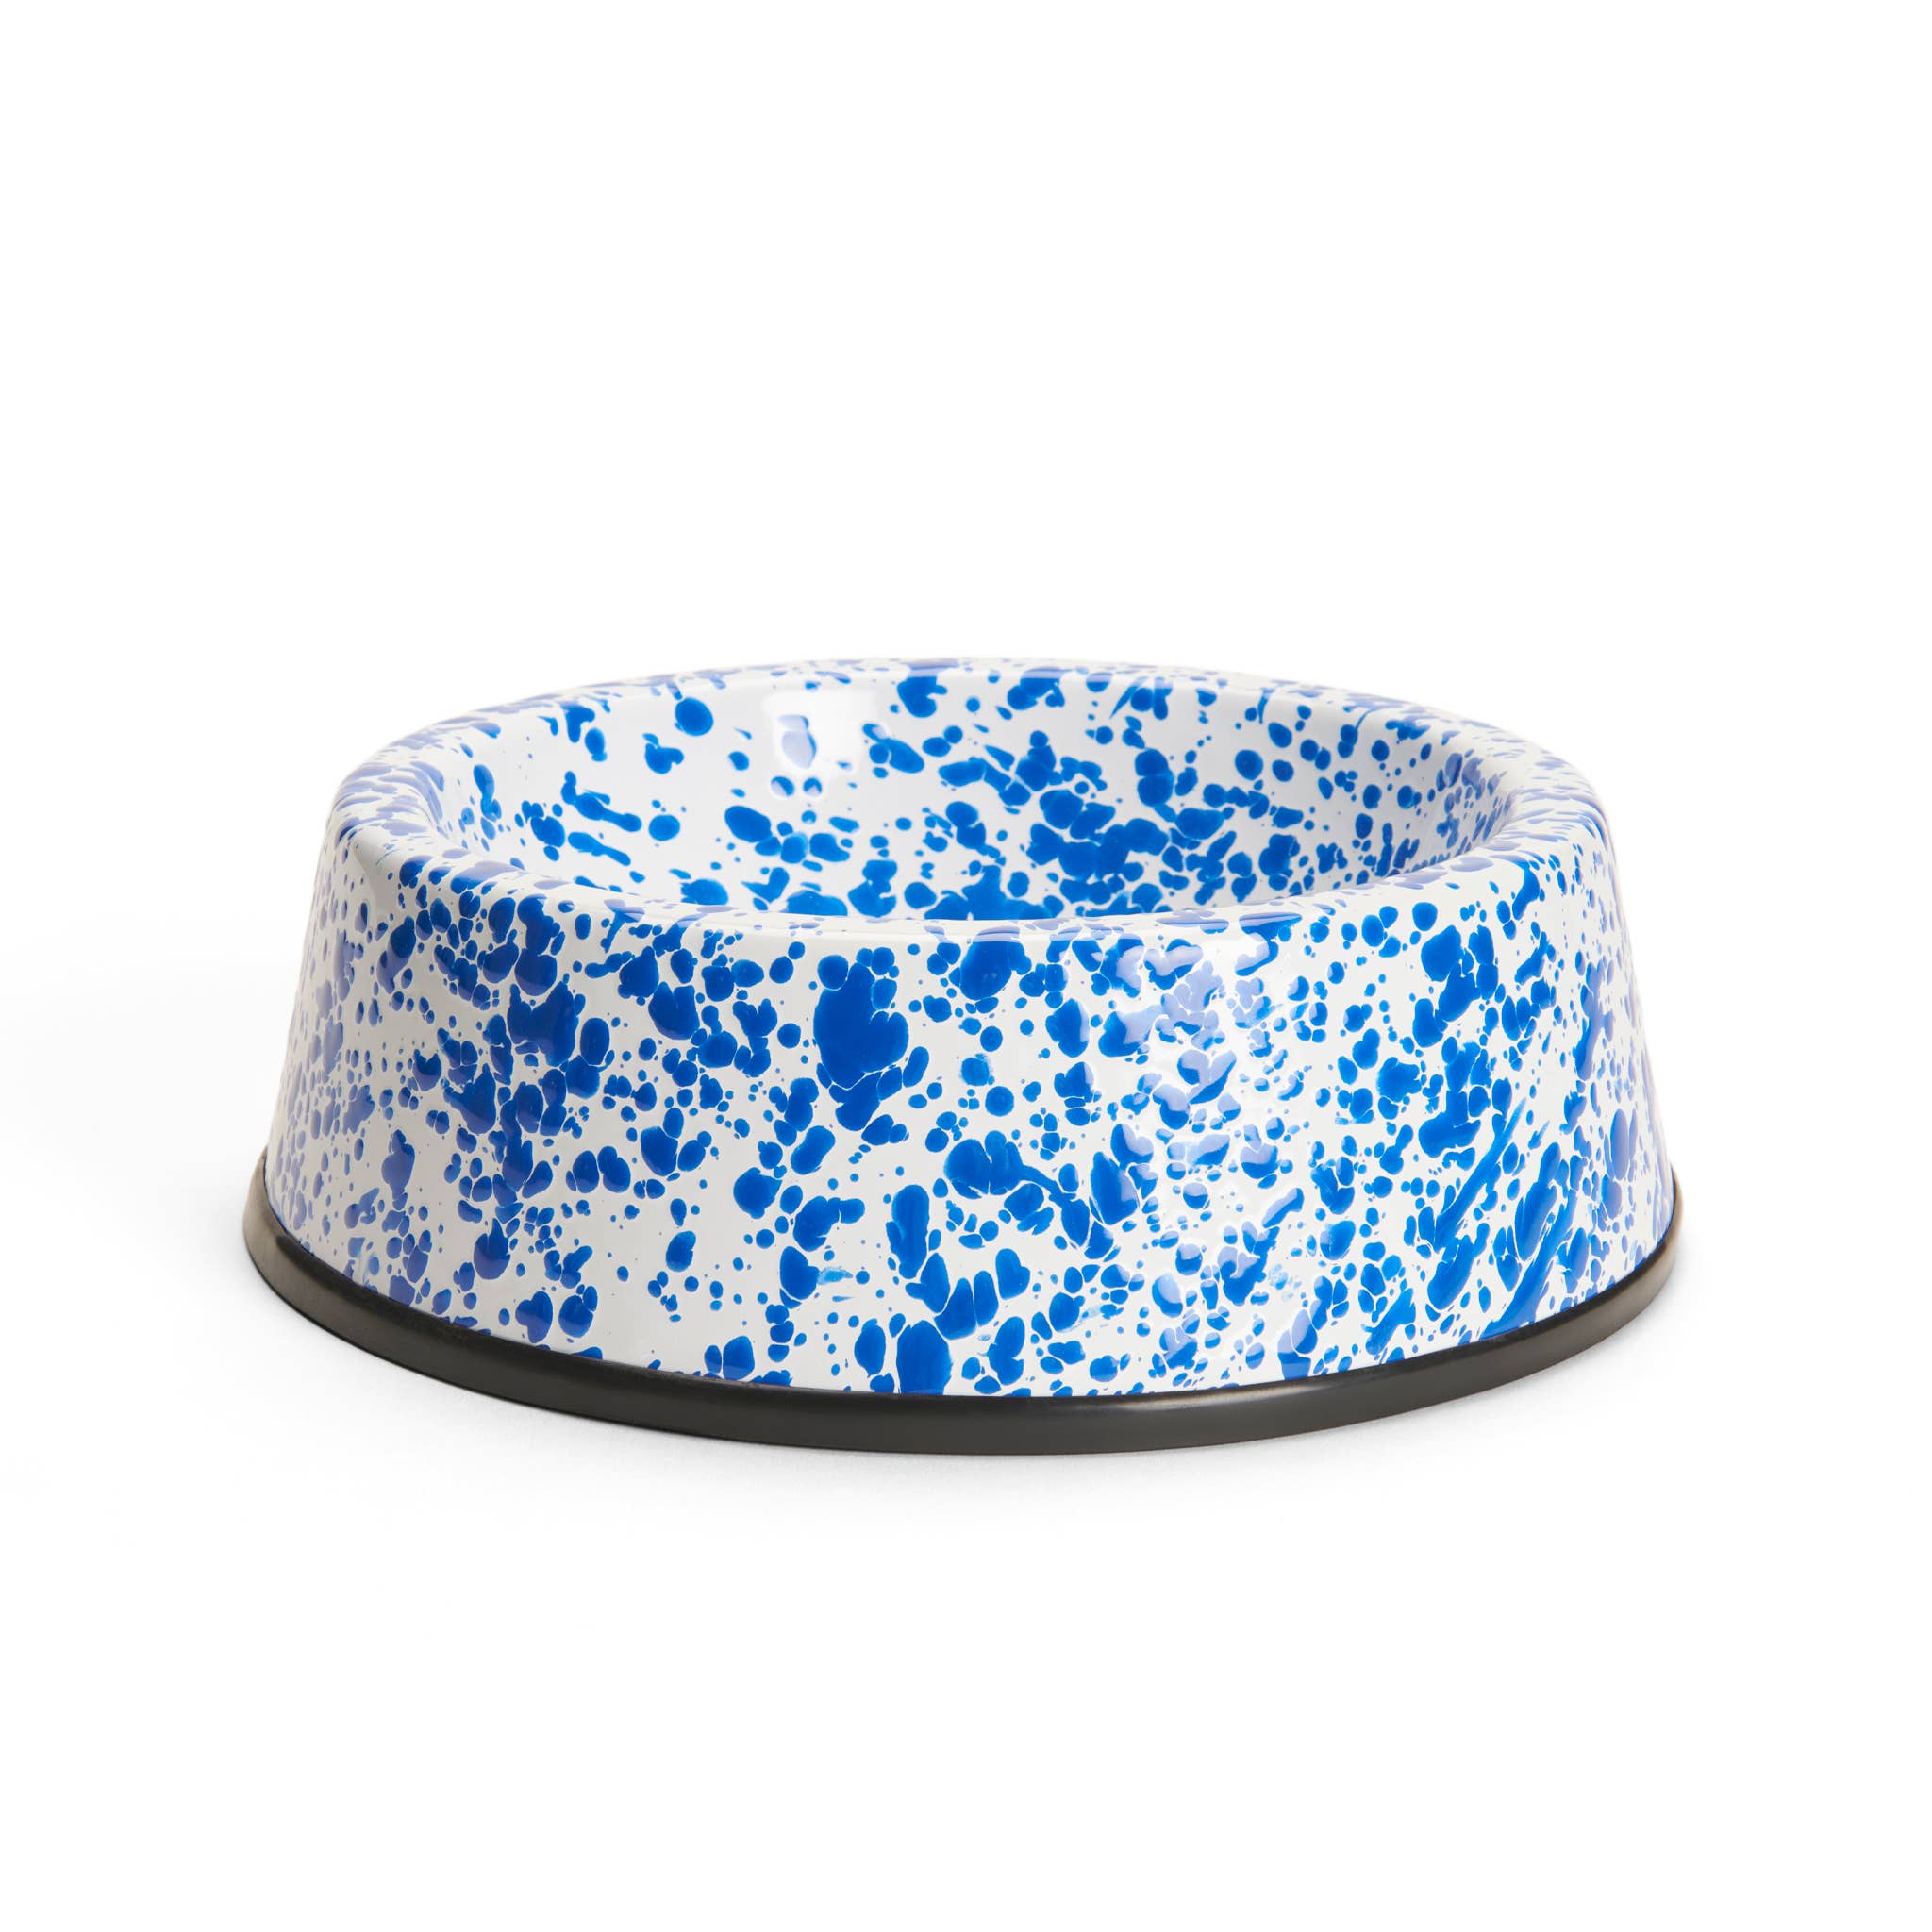 Splatter Enamelware Large Pet Bowl: Blue Splatter